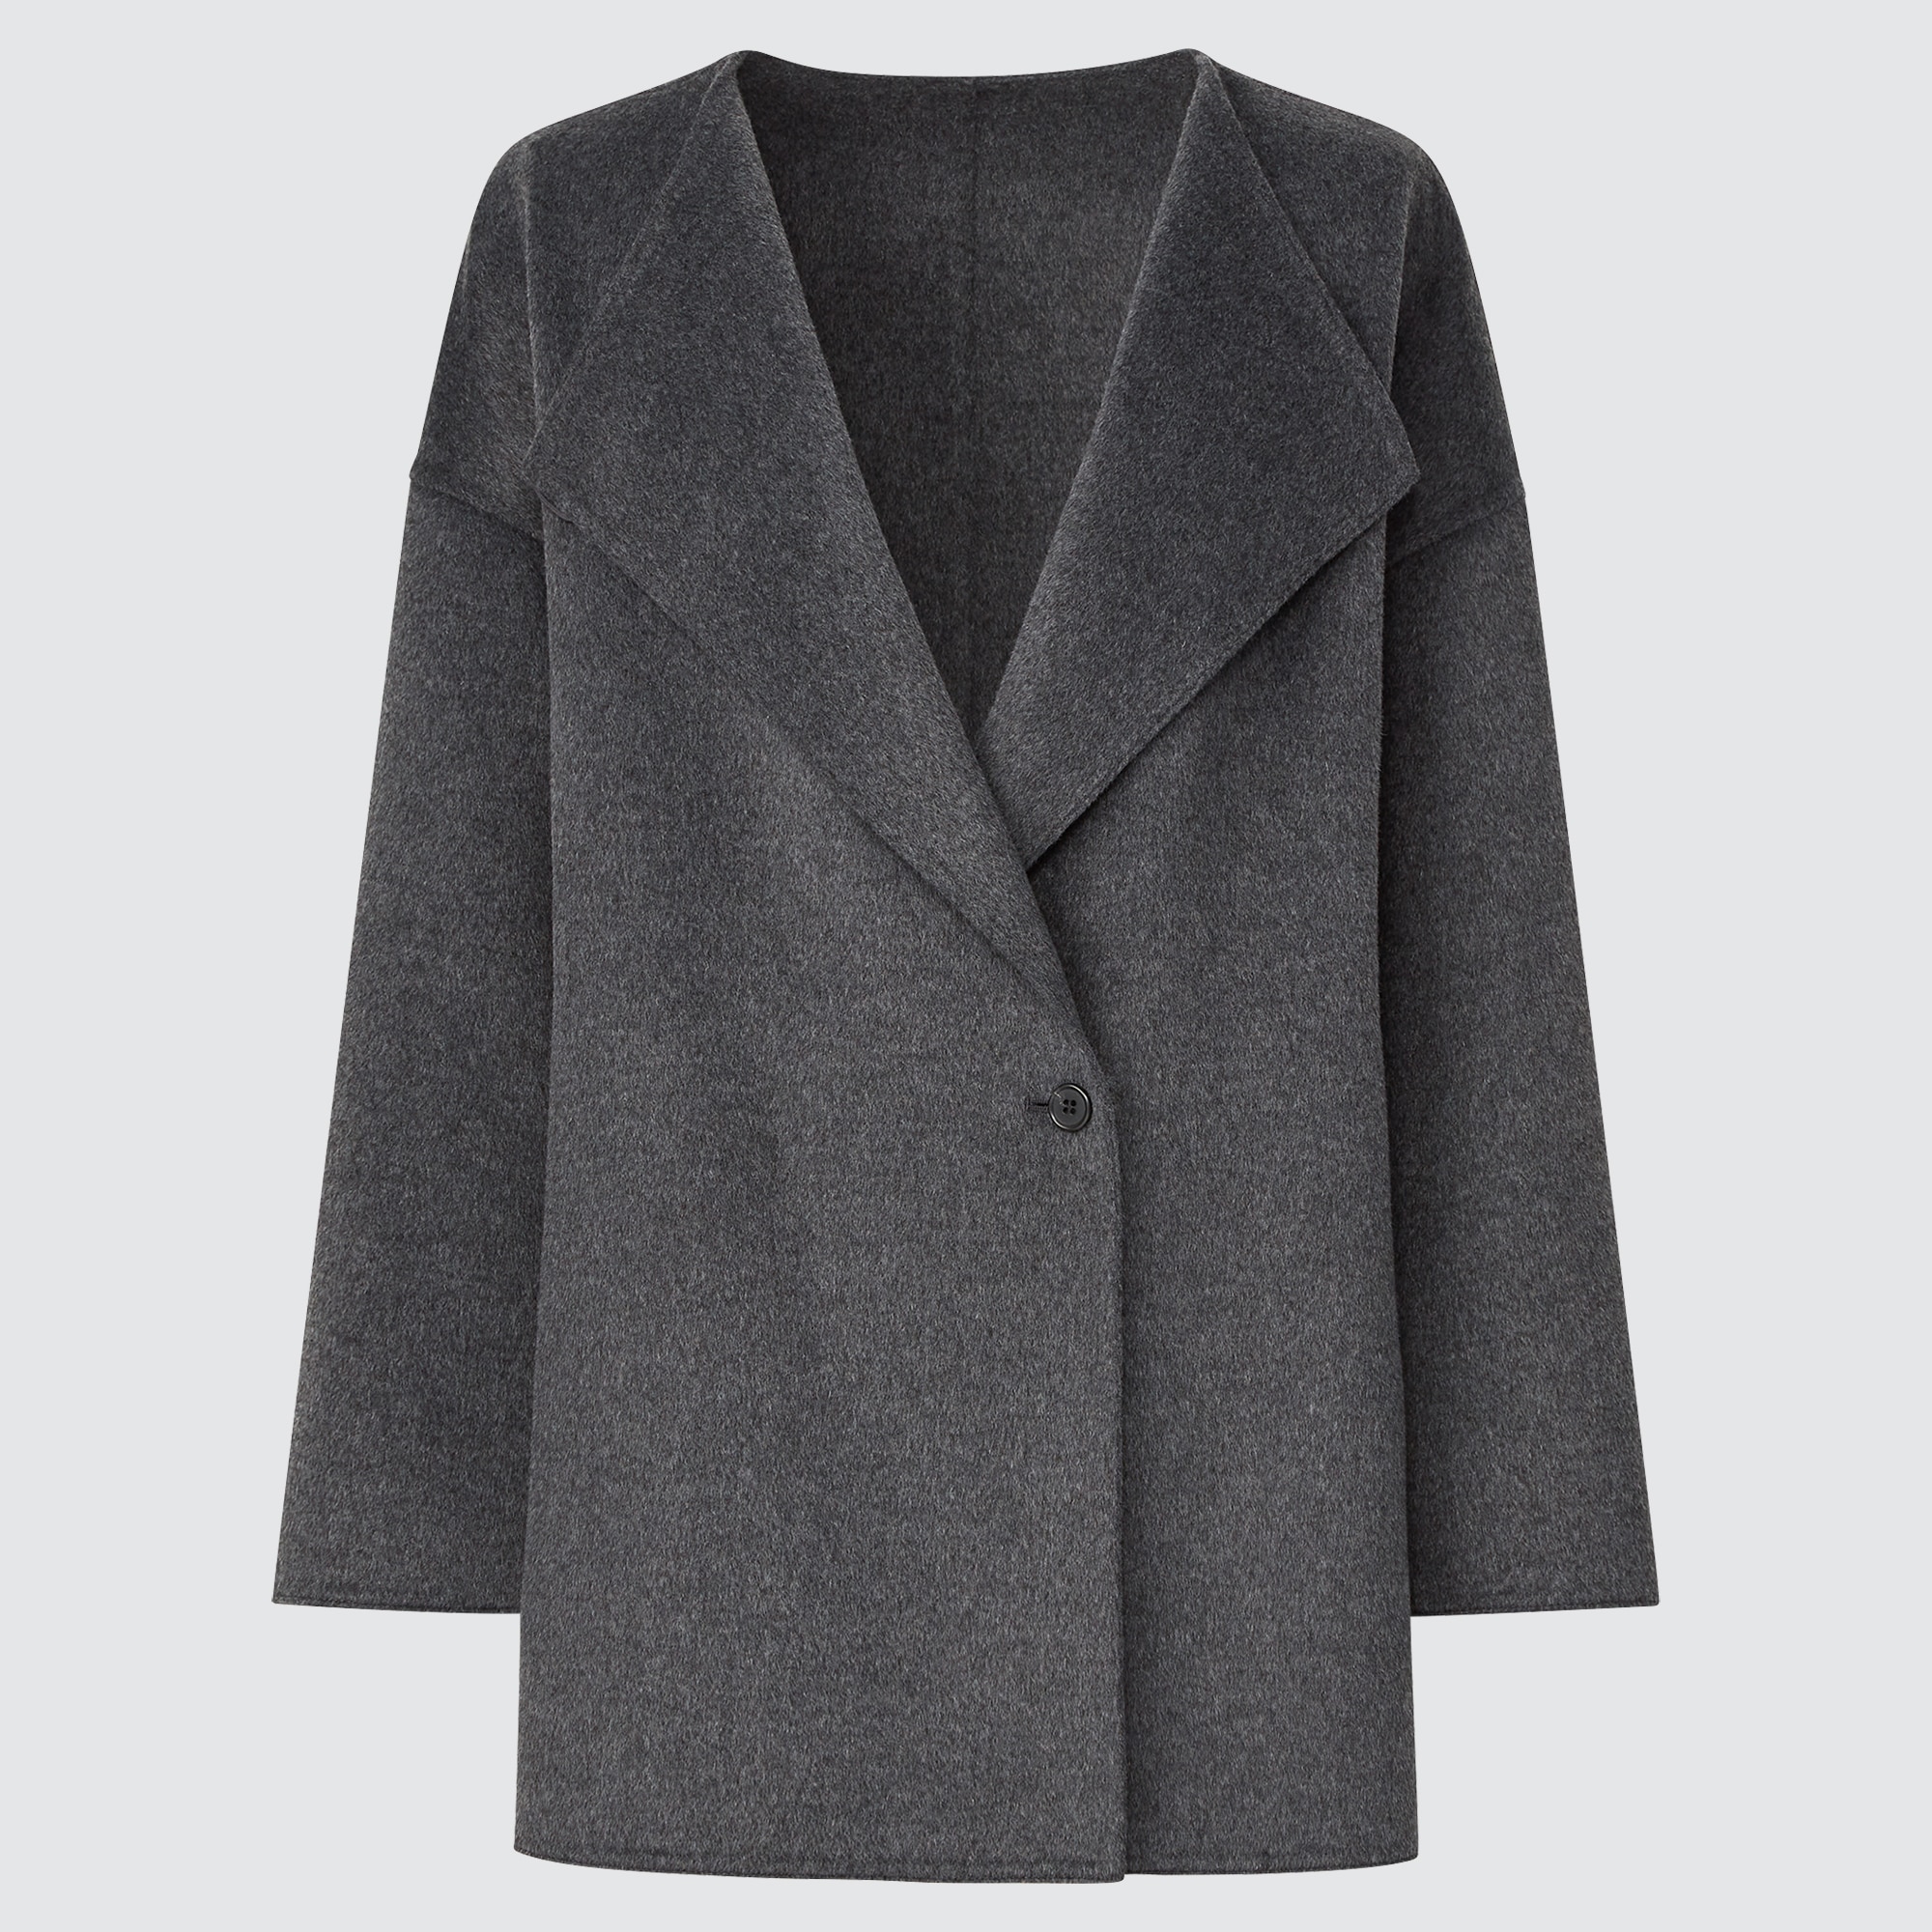 Uniqlo, Jackets & Coats, Uniqlo Double Face Hooded Coat